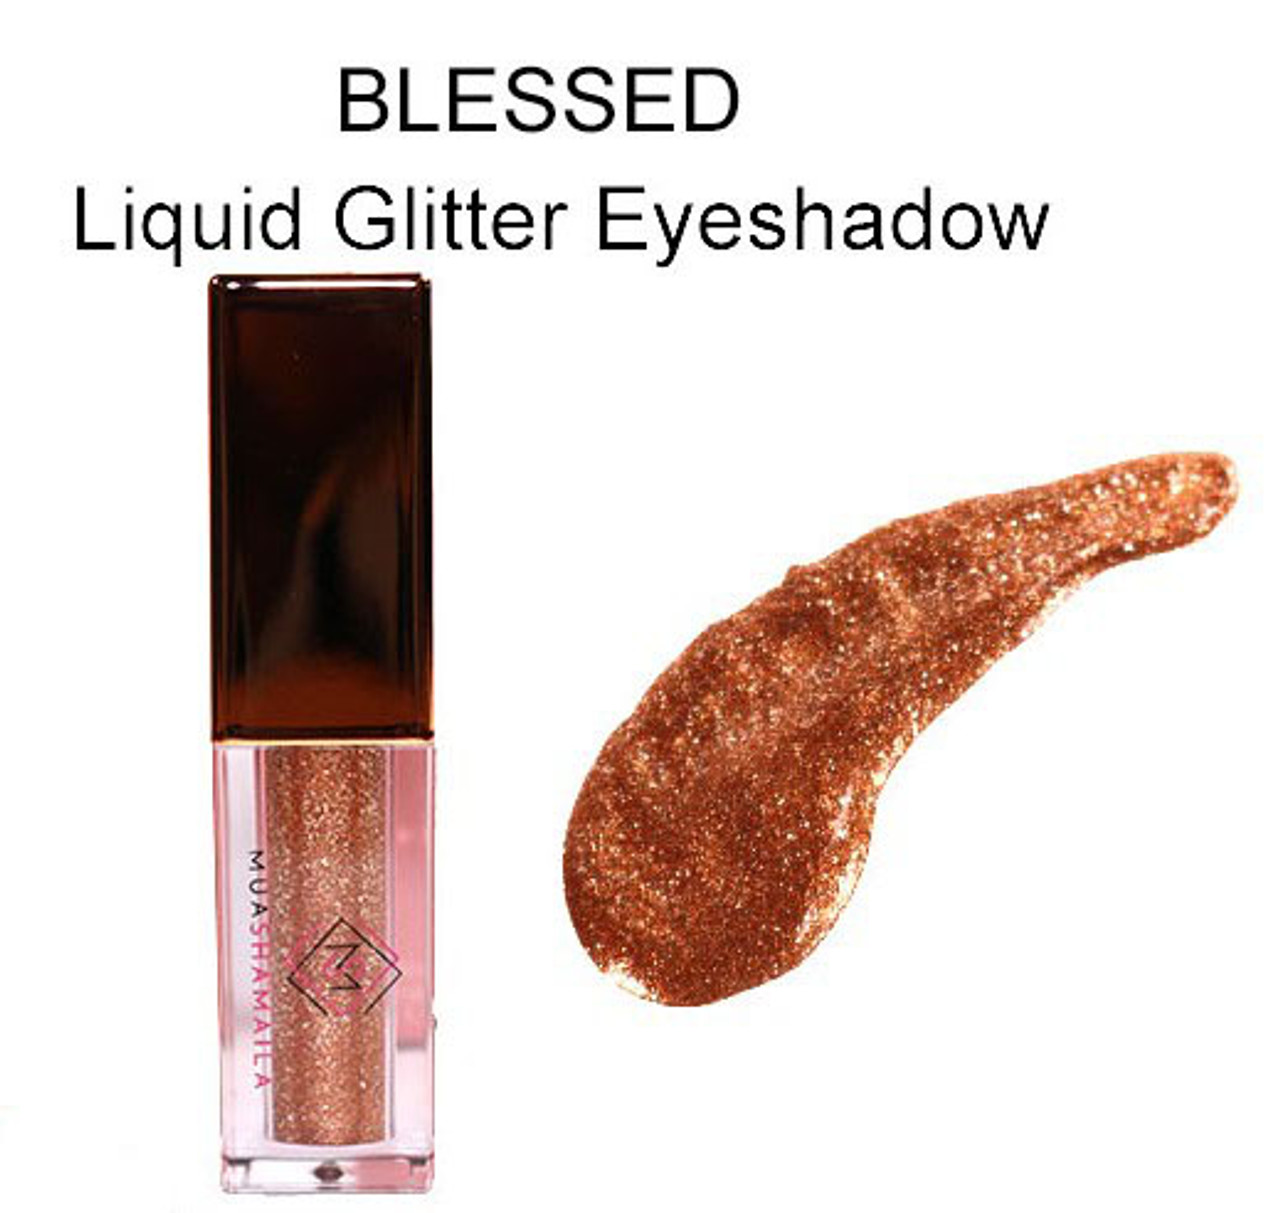 Blessed Liquid Glitter Eyeshadow